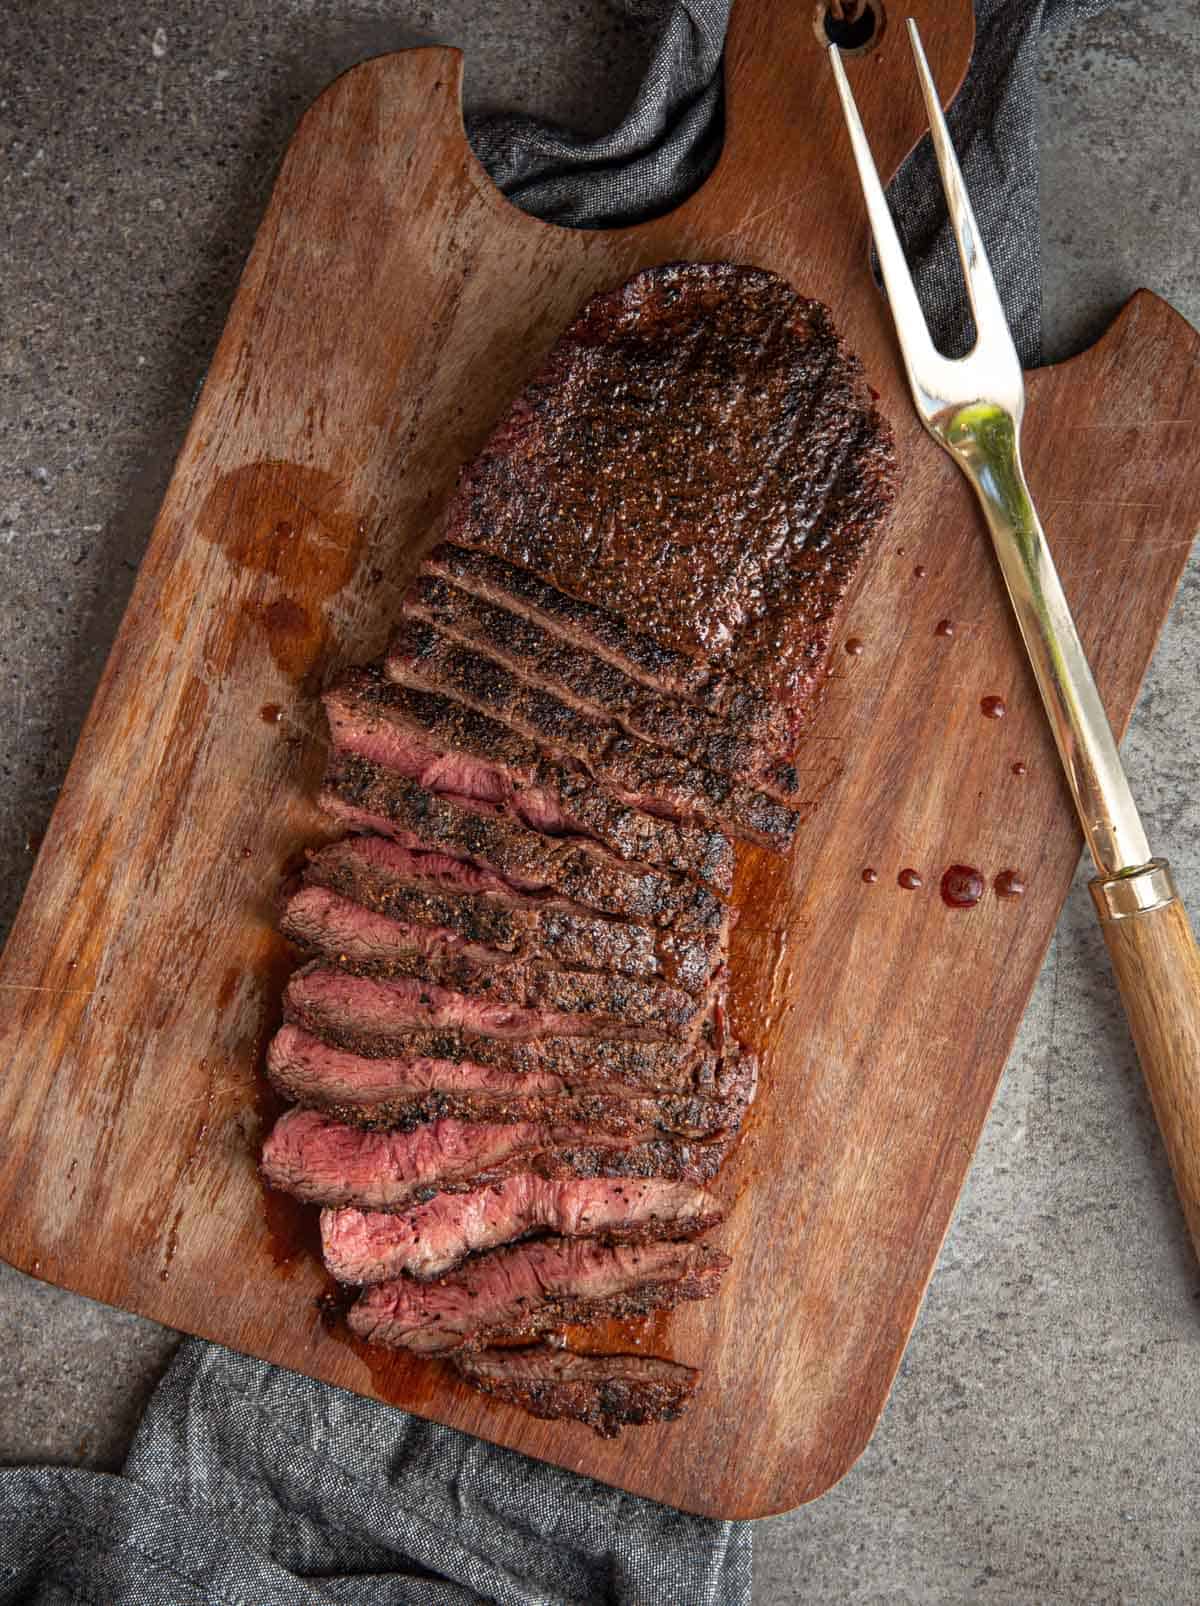 https://www.vindulge.com/wp-content/uploads/2020/08/Grilled-Flat-Iron-Steak-no-sauce.jpg